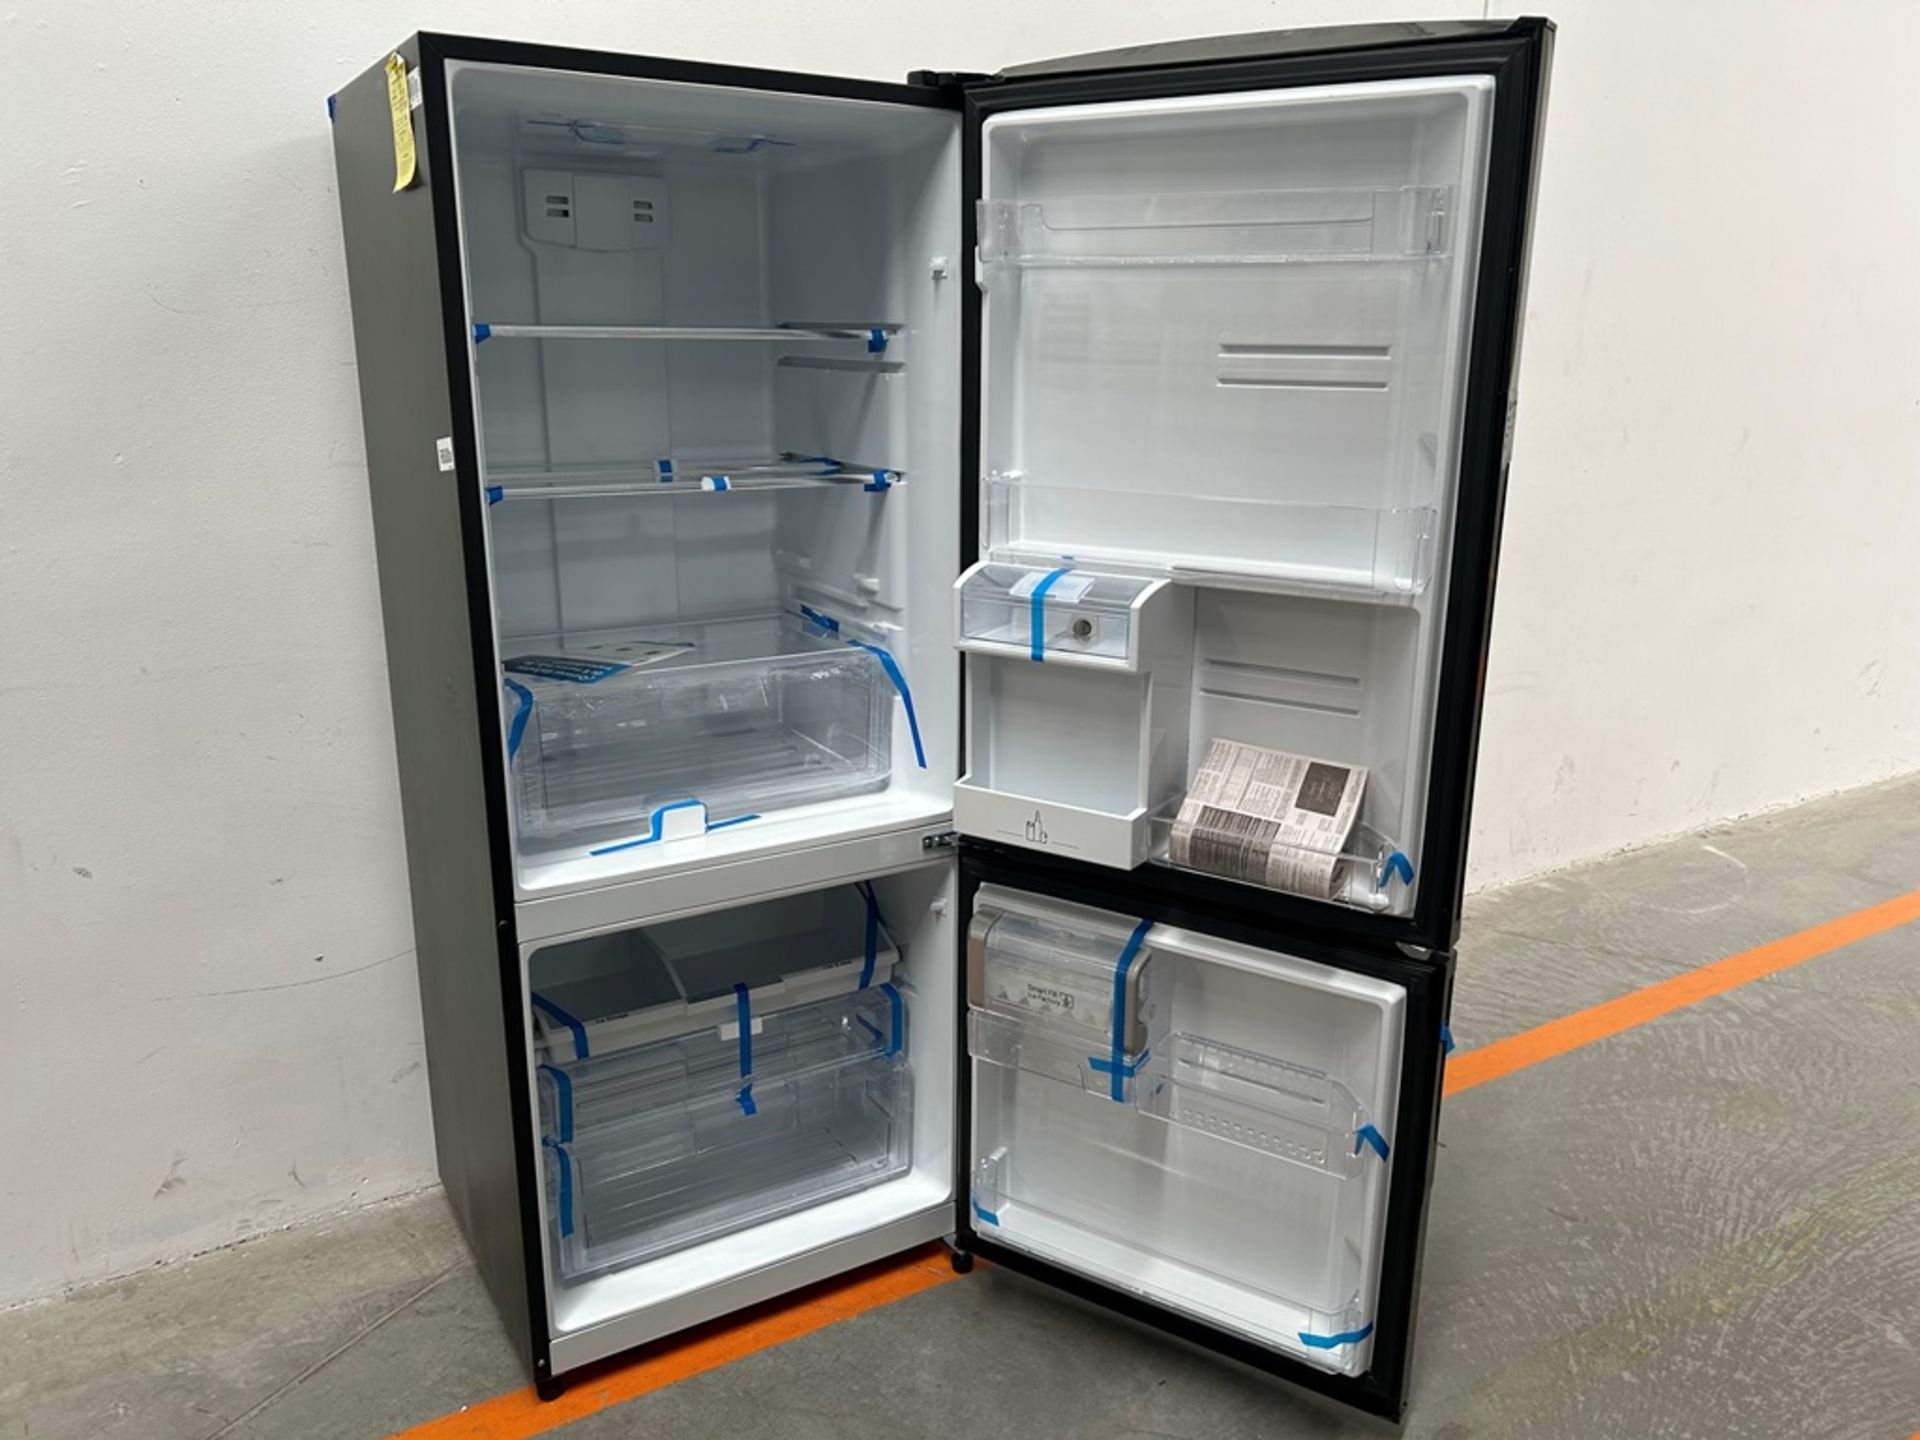 (NUEVO) Refrigerador con dispensador de agua Marca MABE, Modelo RMB520IJMRPB, Serie 14142, Color NE - Image 4 of 11